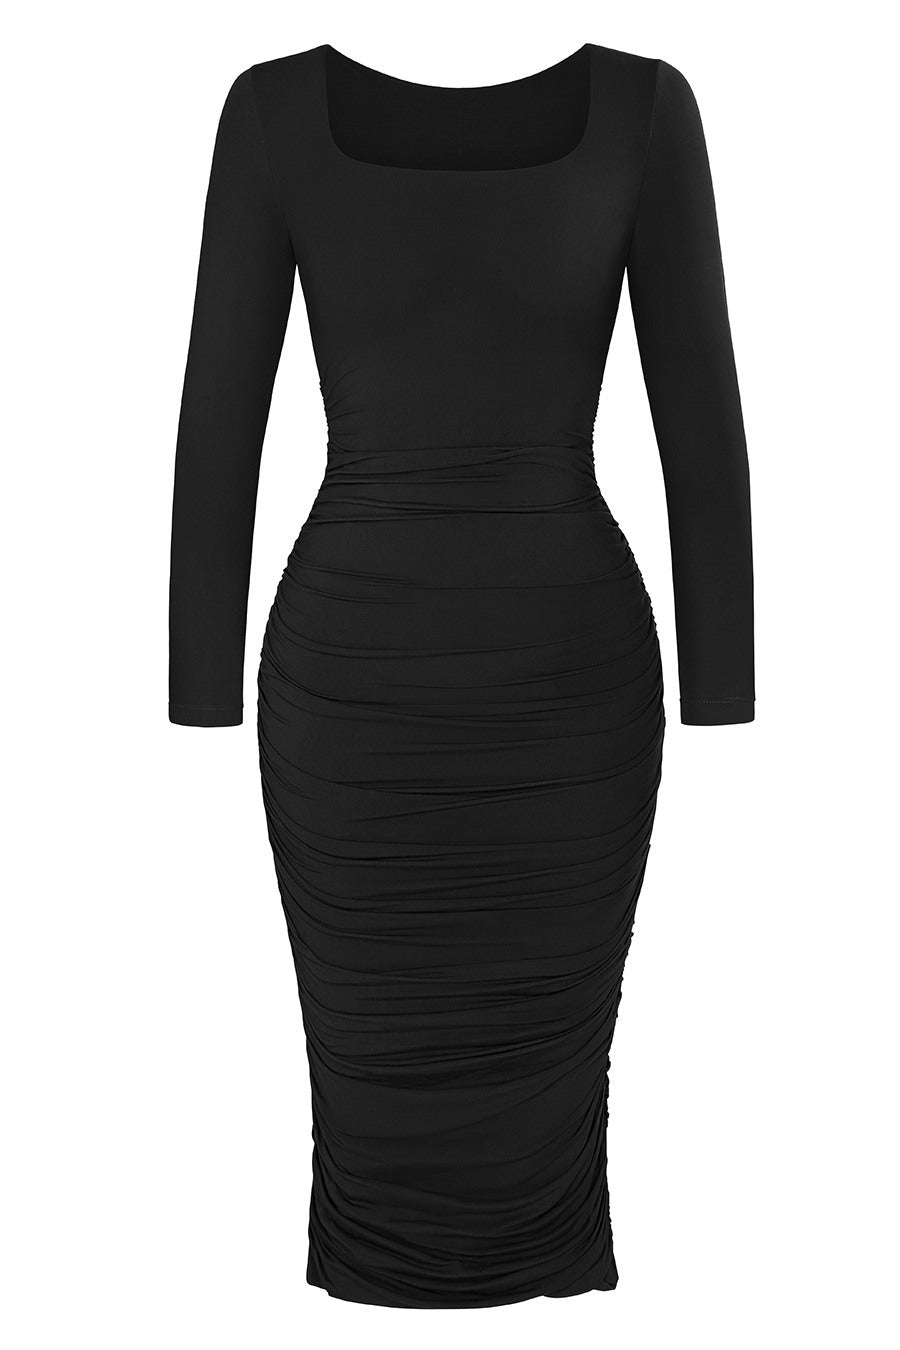 Captivate Shaping Dress - Black Contour Clothing